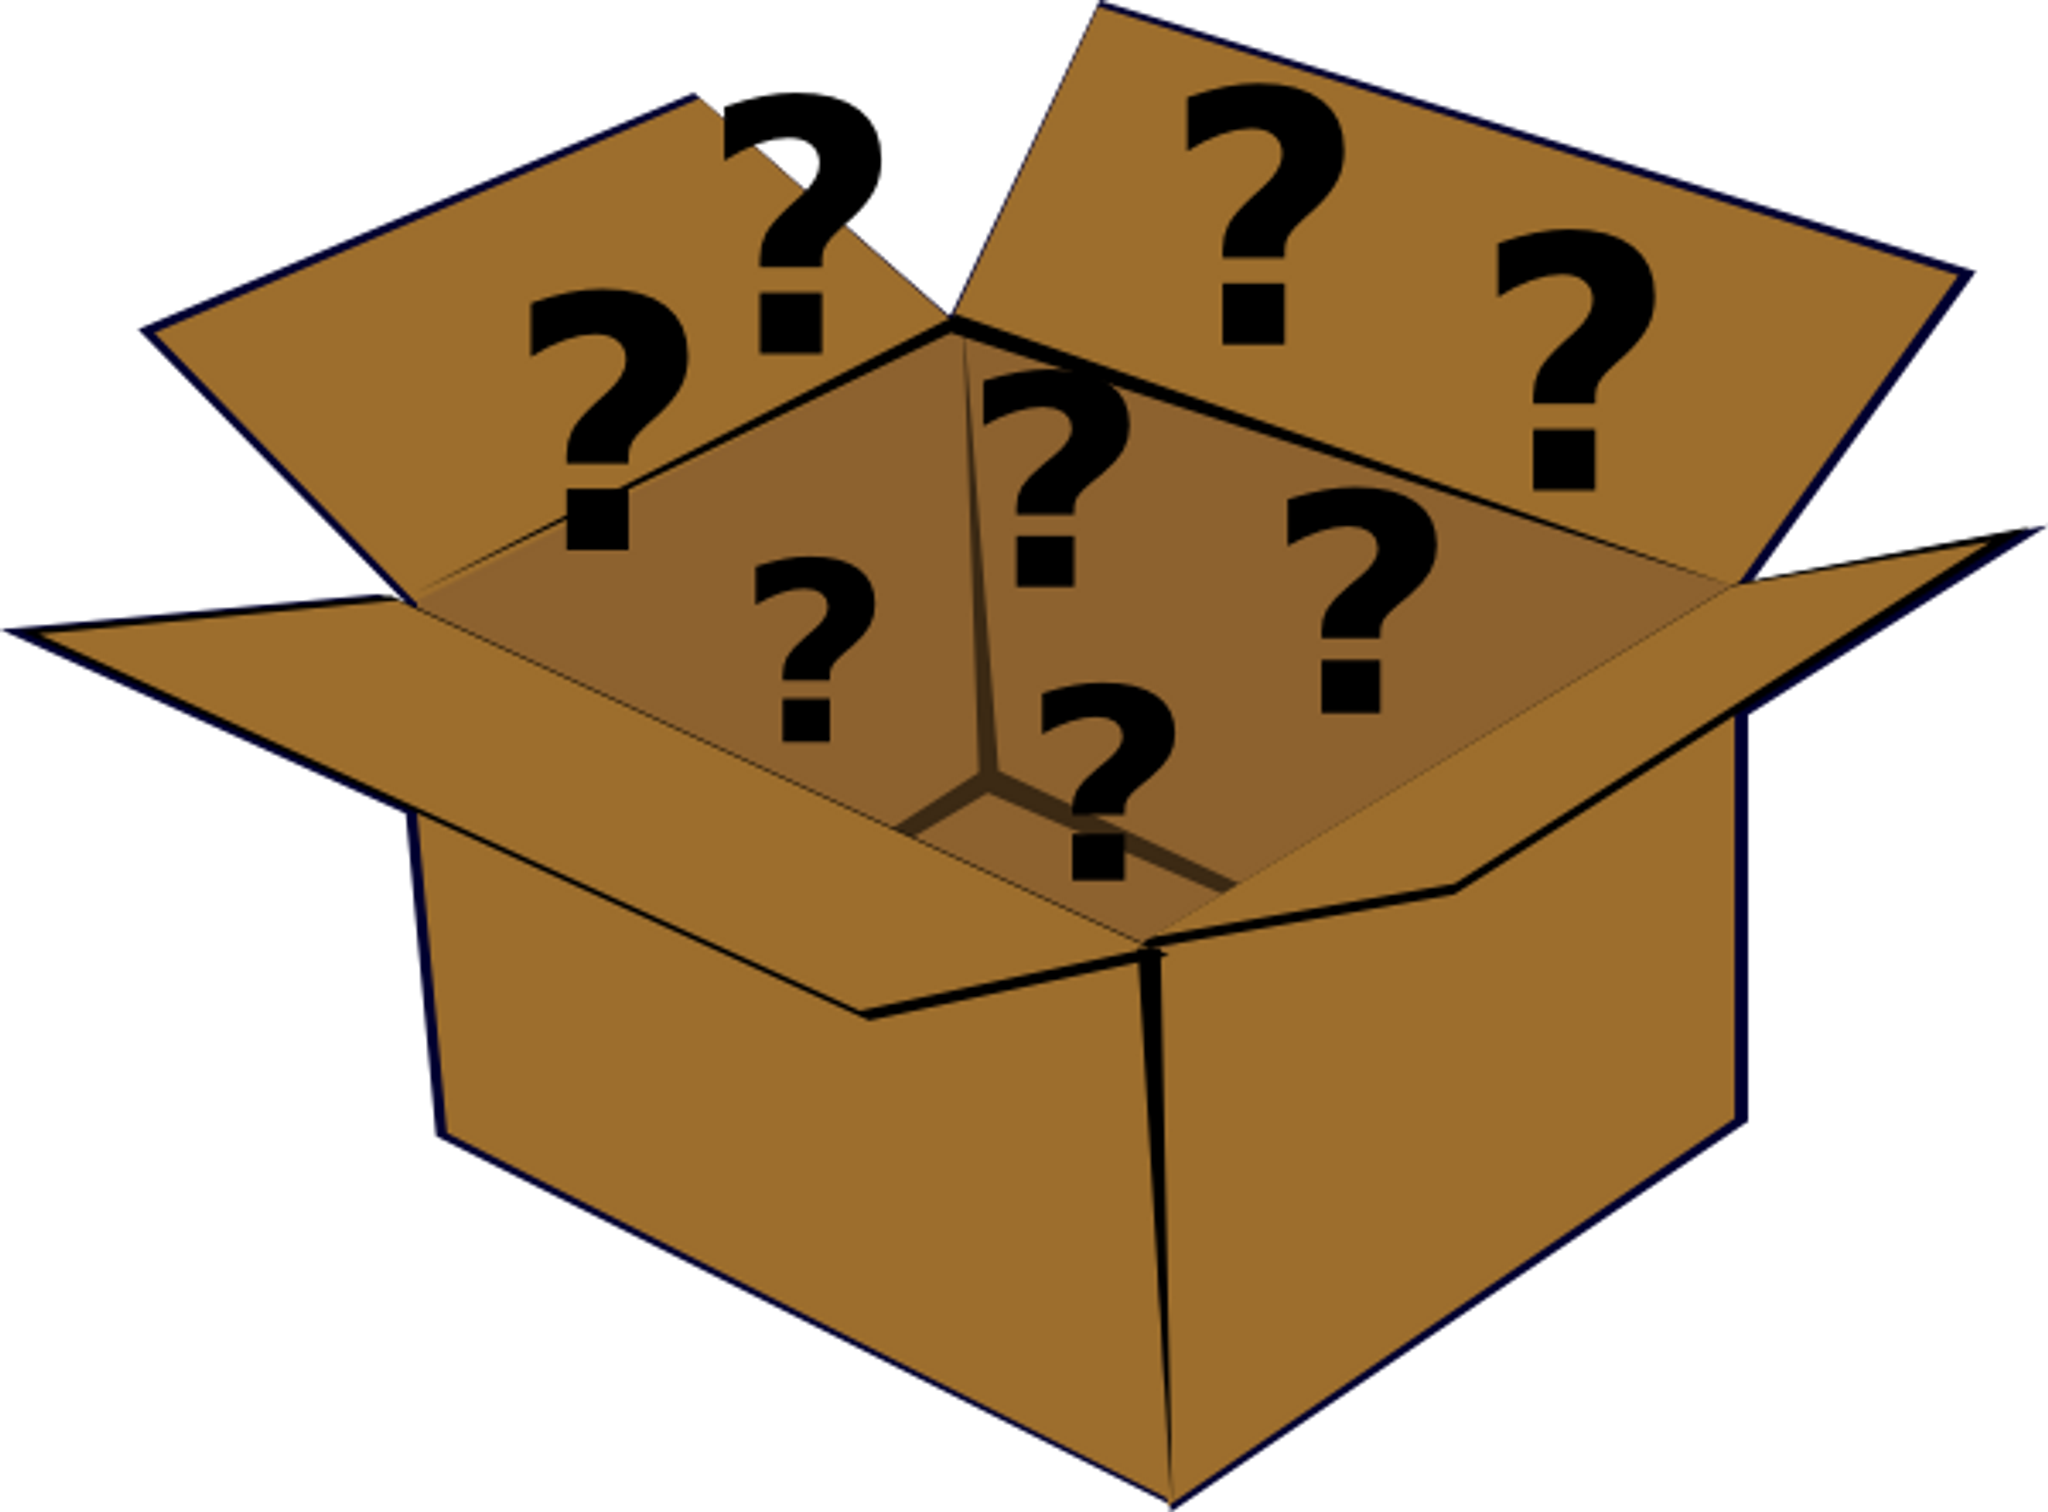 $150 Mystery Box